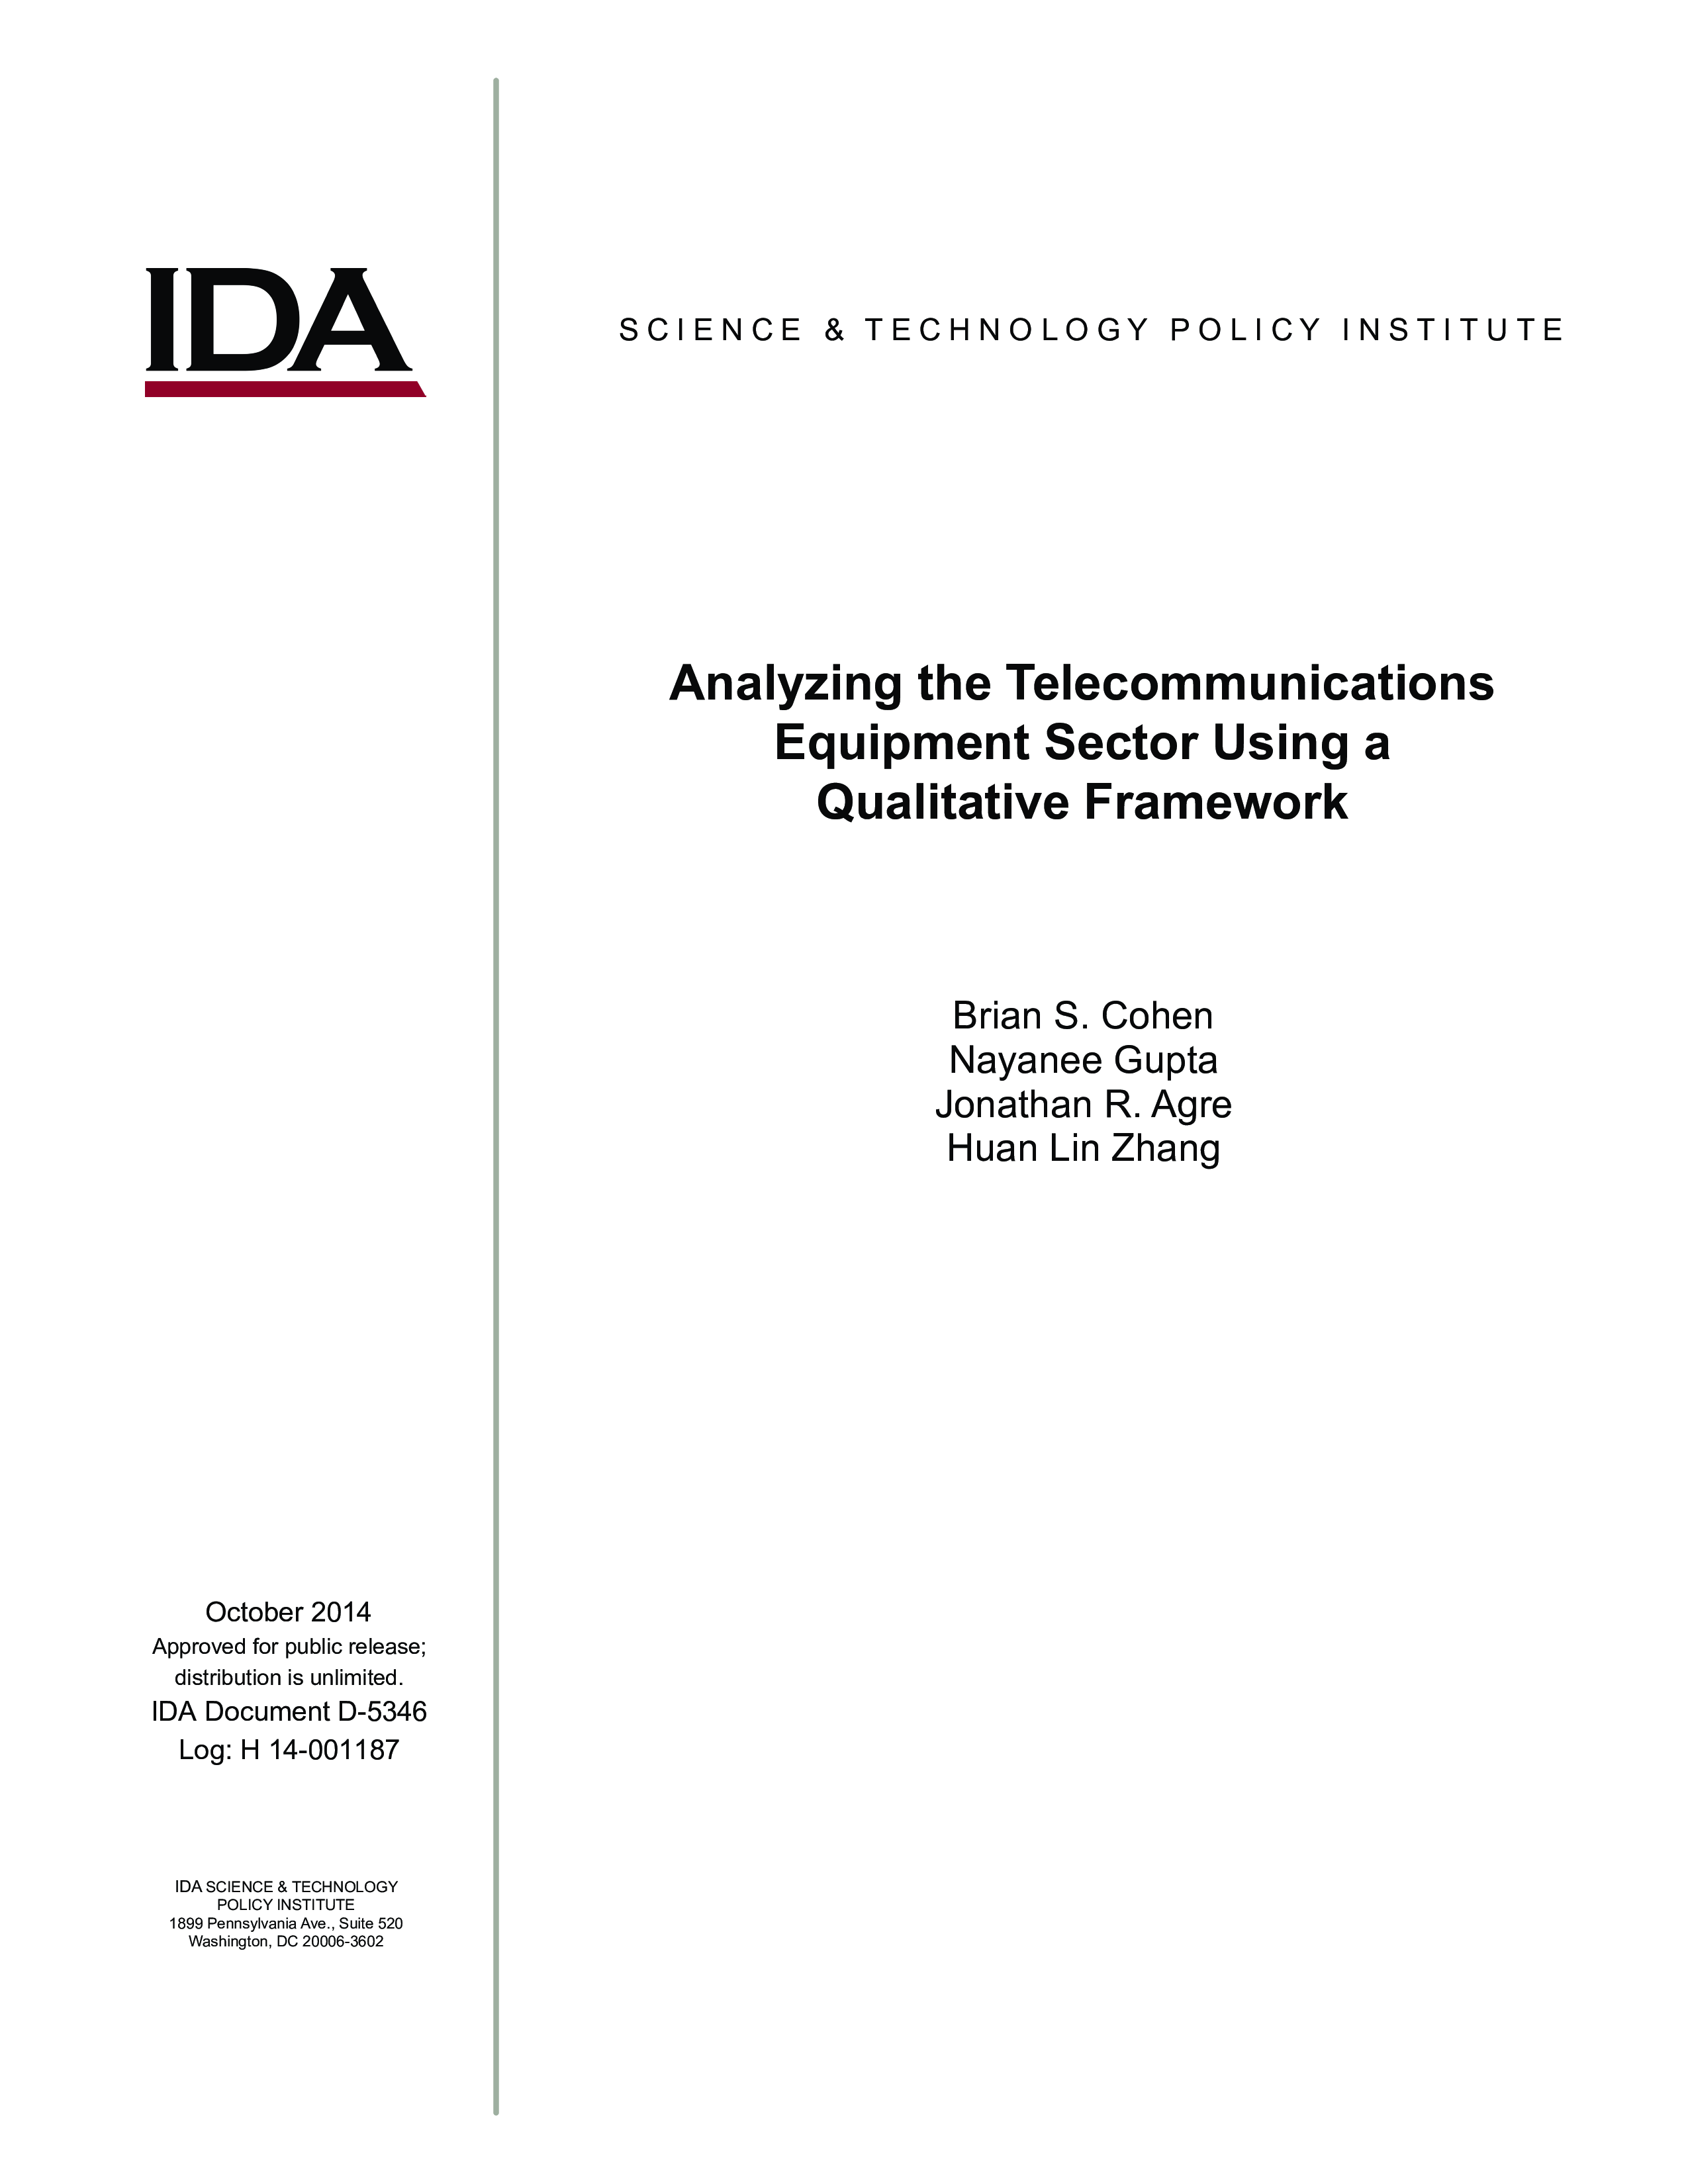 Analyzing the Telecommunications Equipment Sector Using a Qualitative Framework